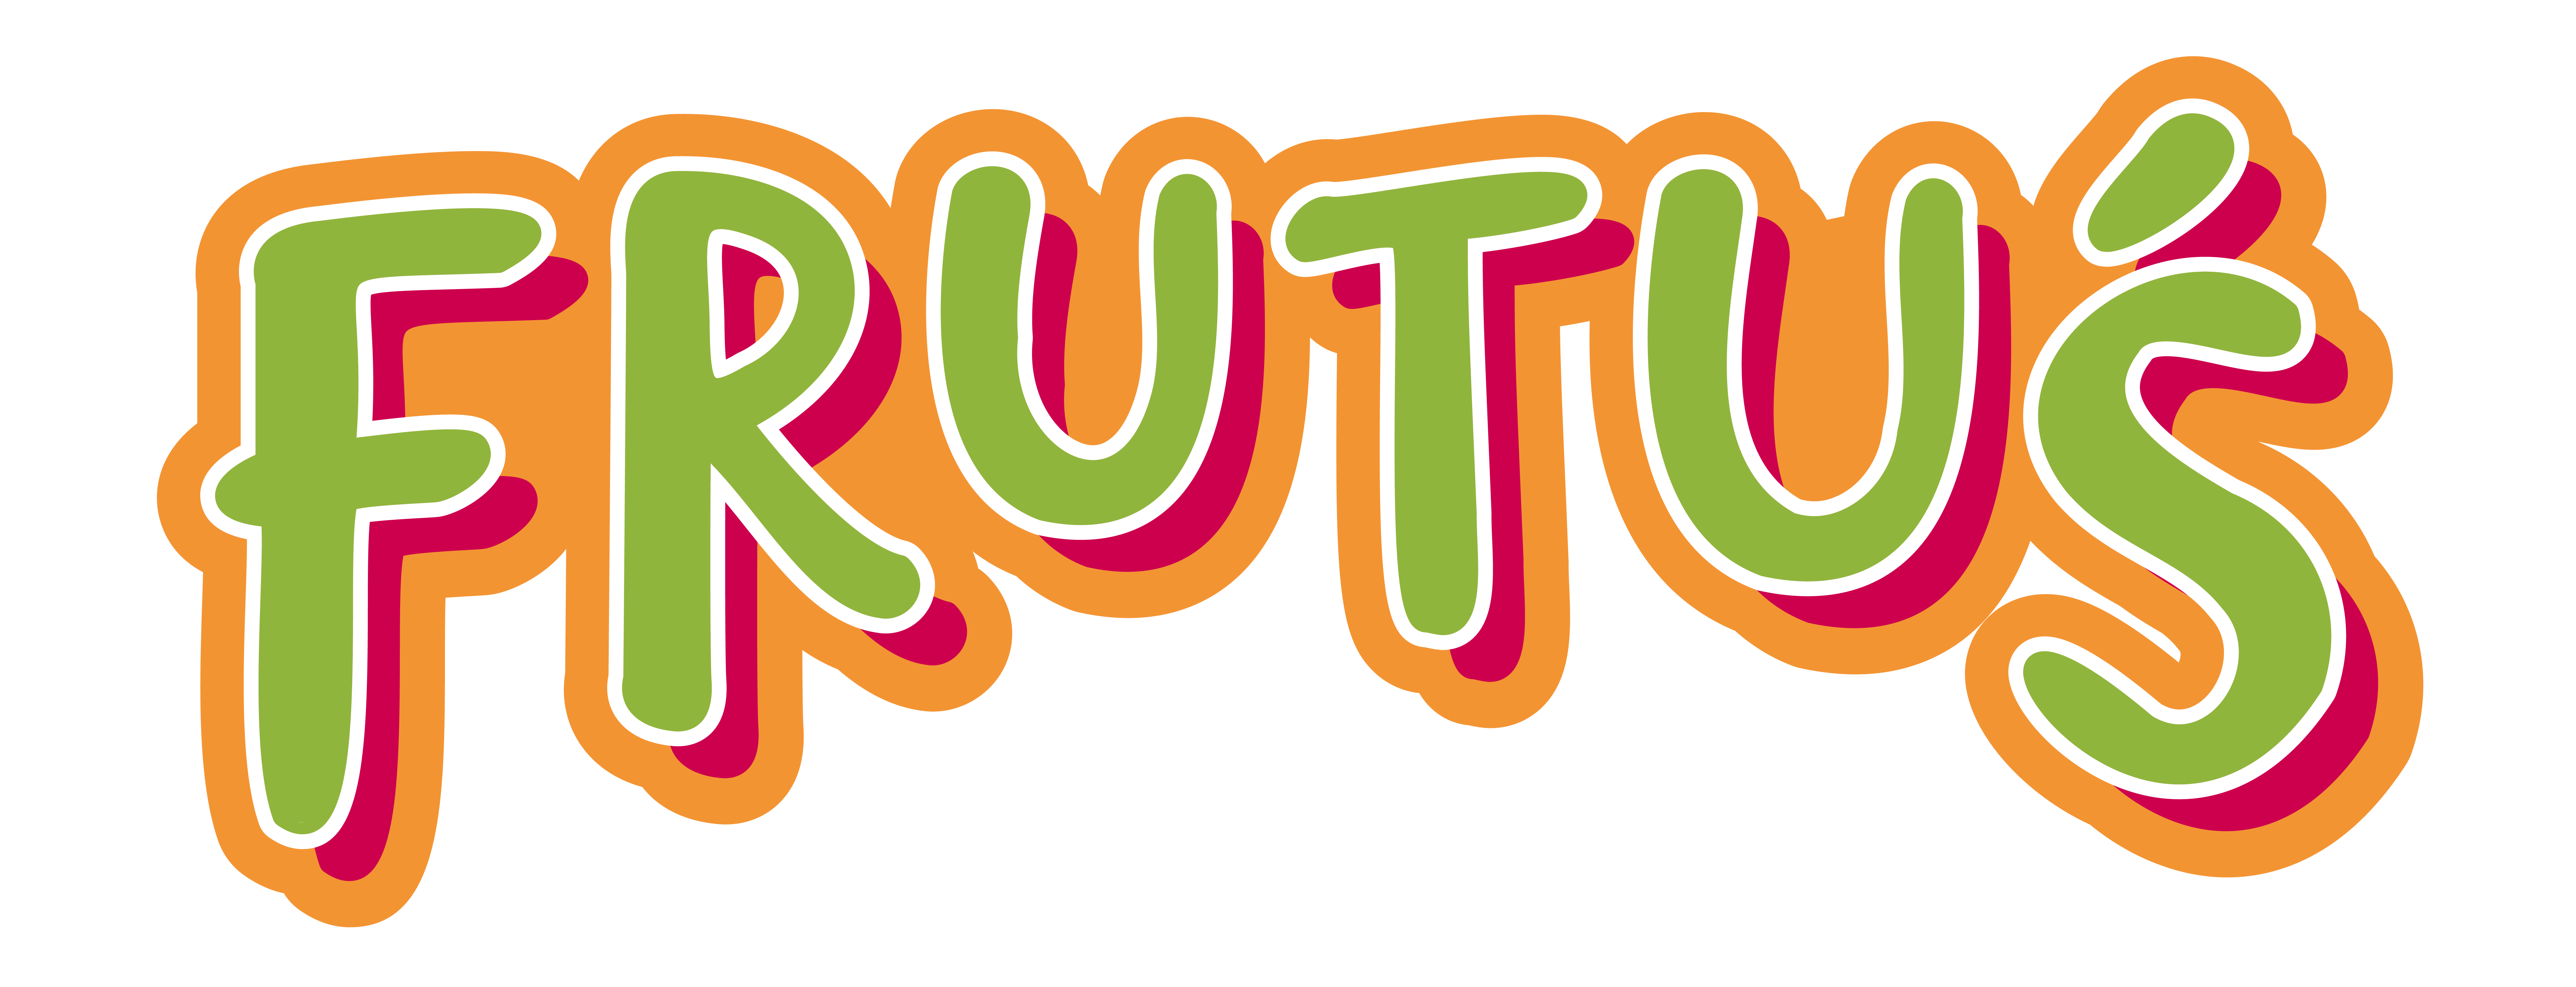 frutus logo